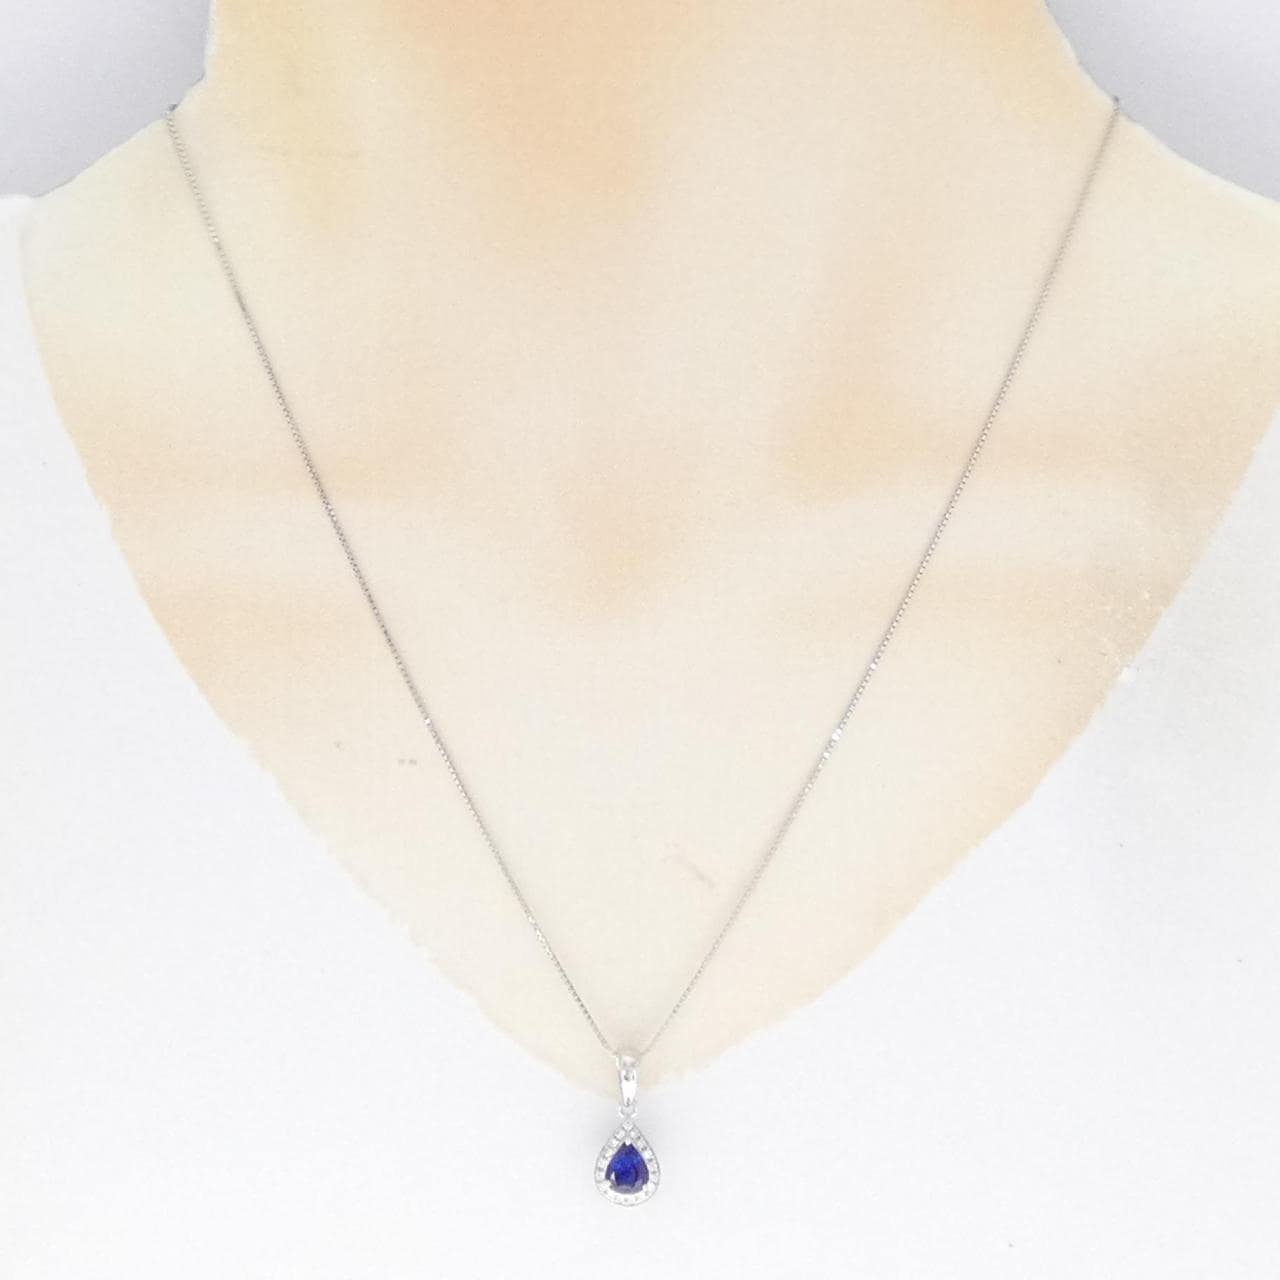 K18WG sapphire necklace 0.91CT